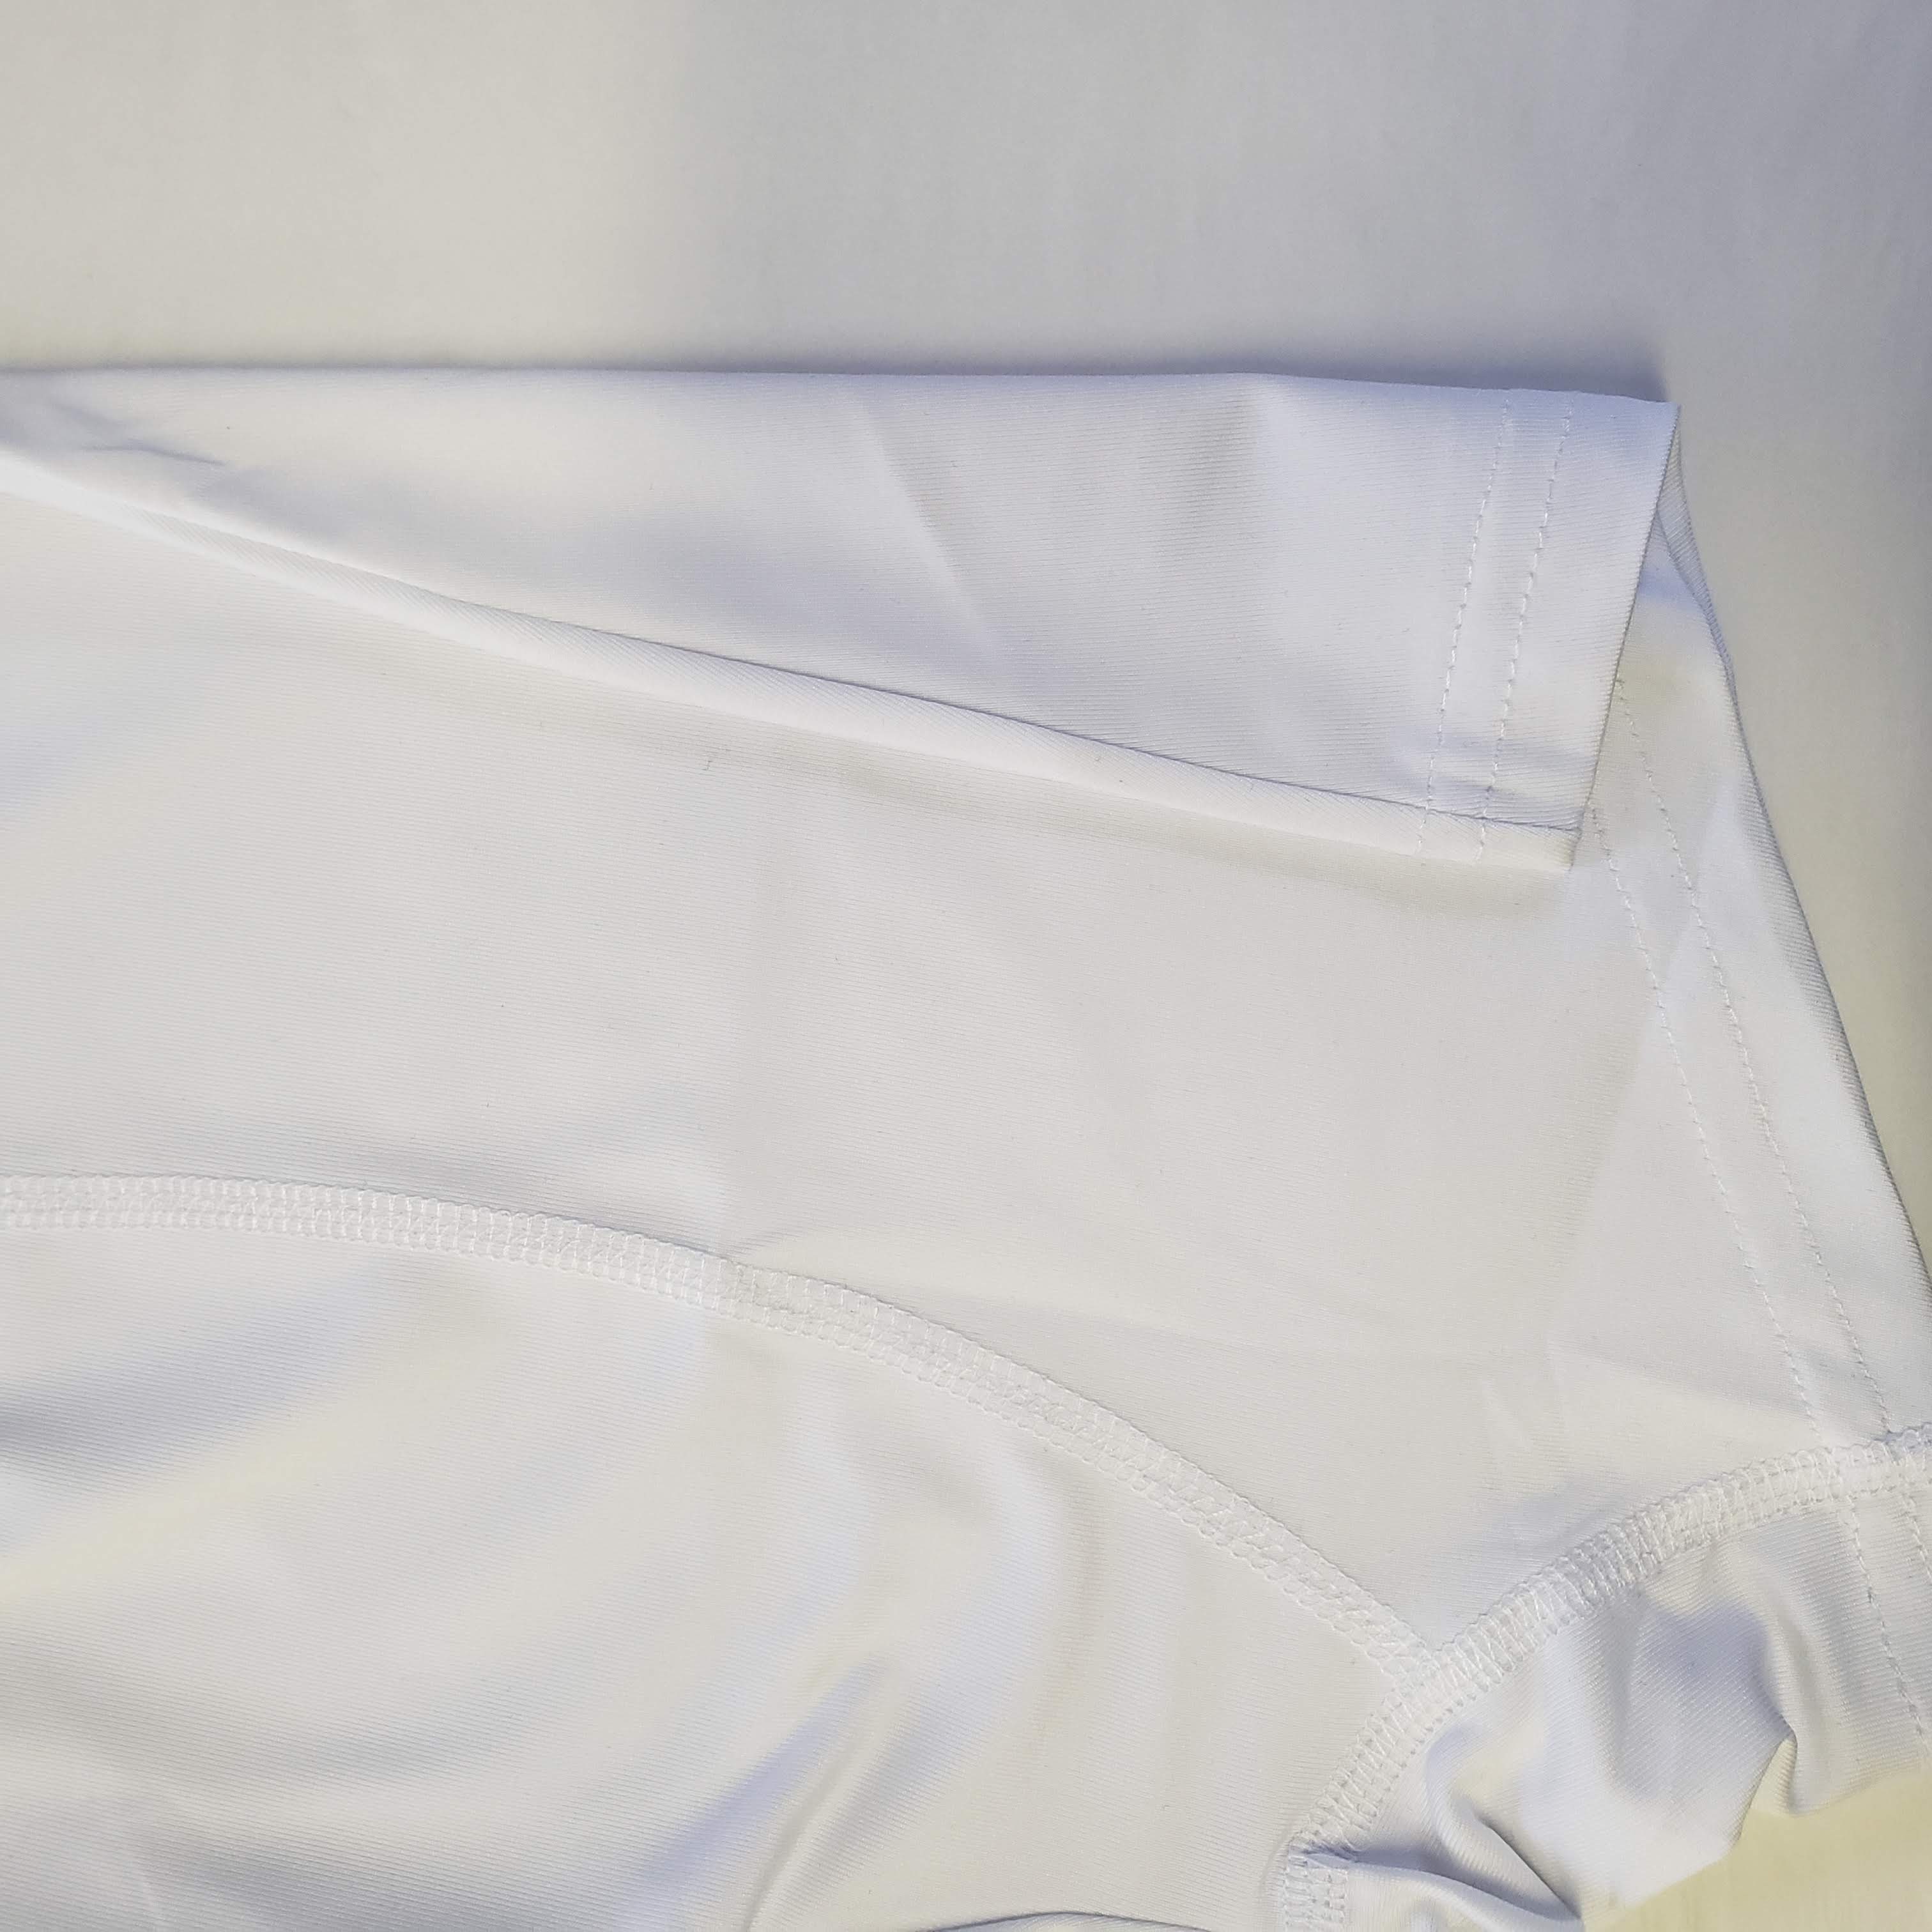 Men's Boxer Brief Underwear for Sublimation – Design Blanks